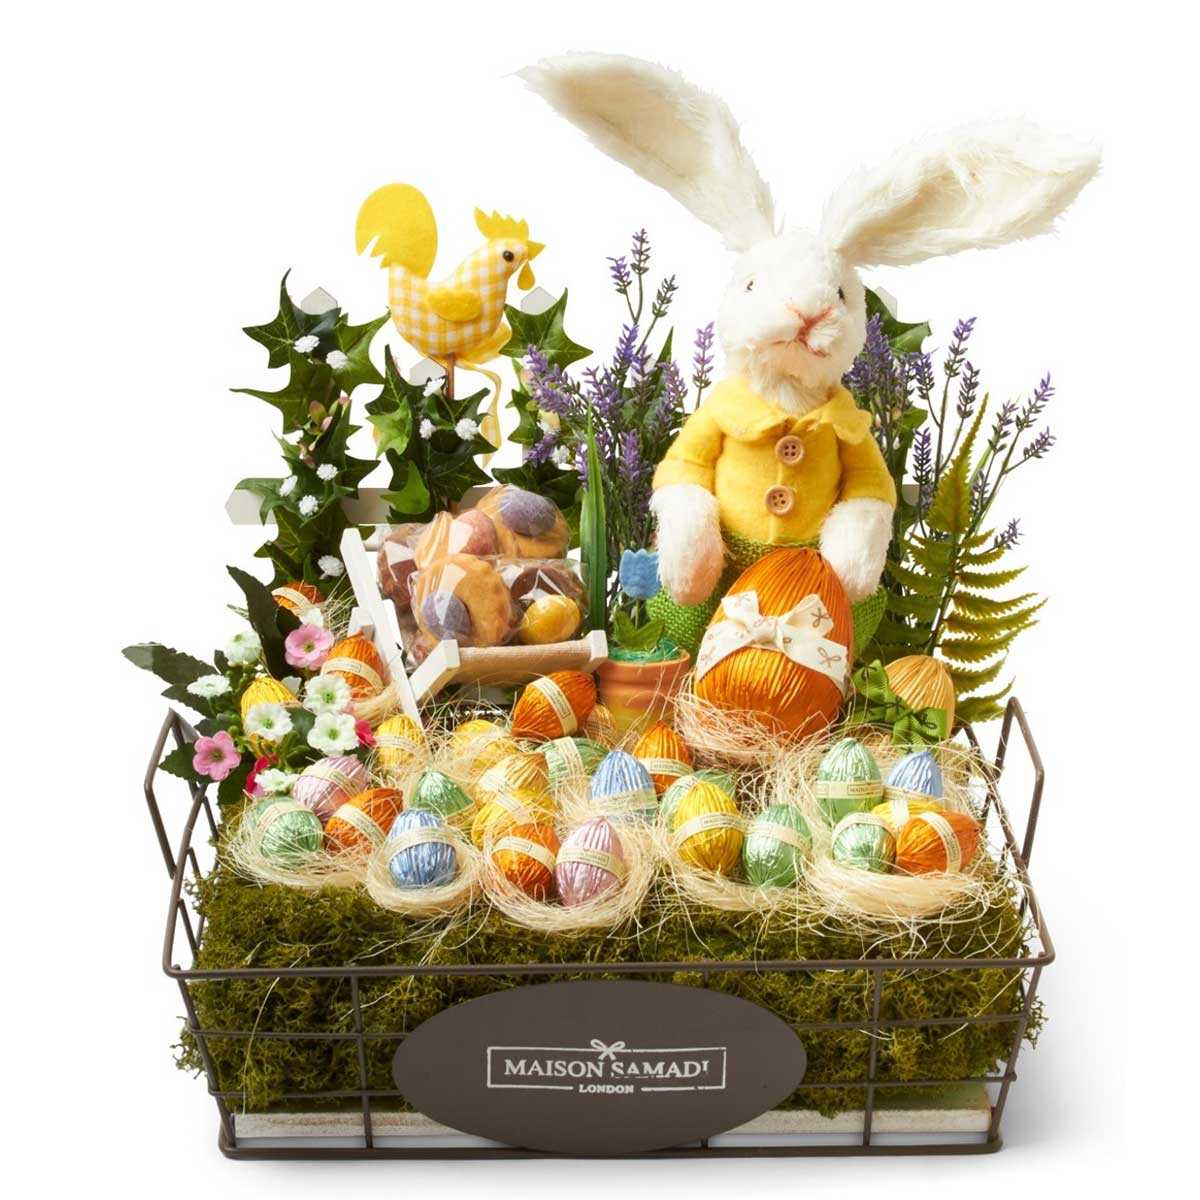 Maison Samadi Chocolate Easter Basket